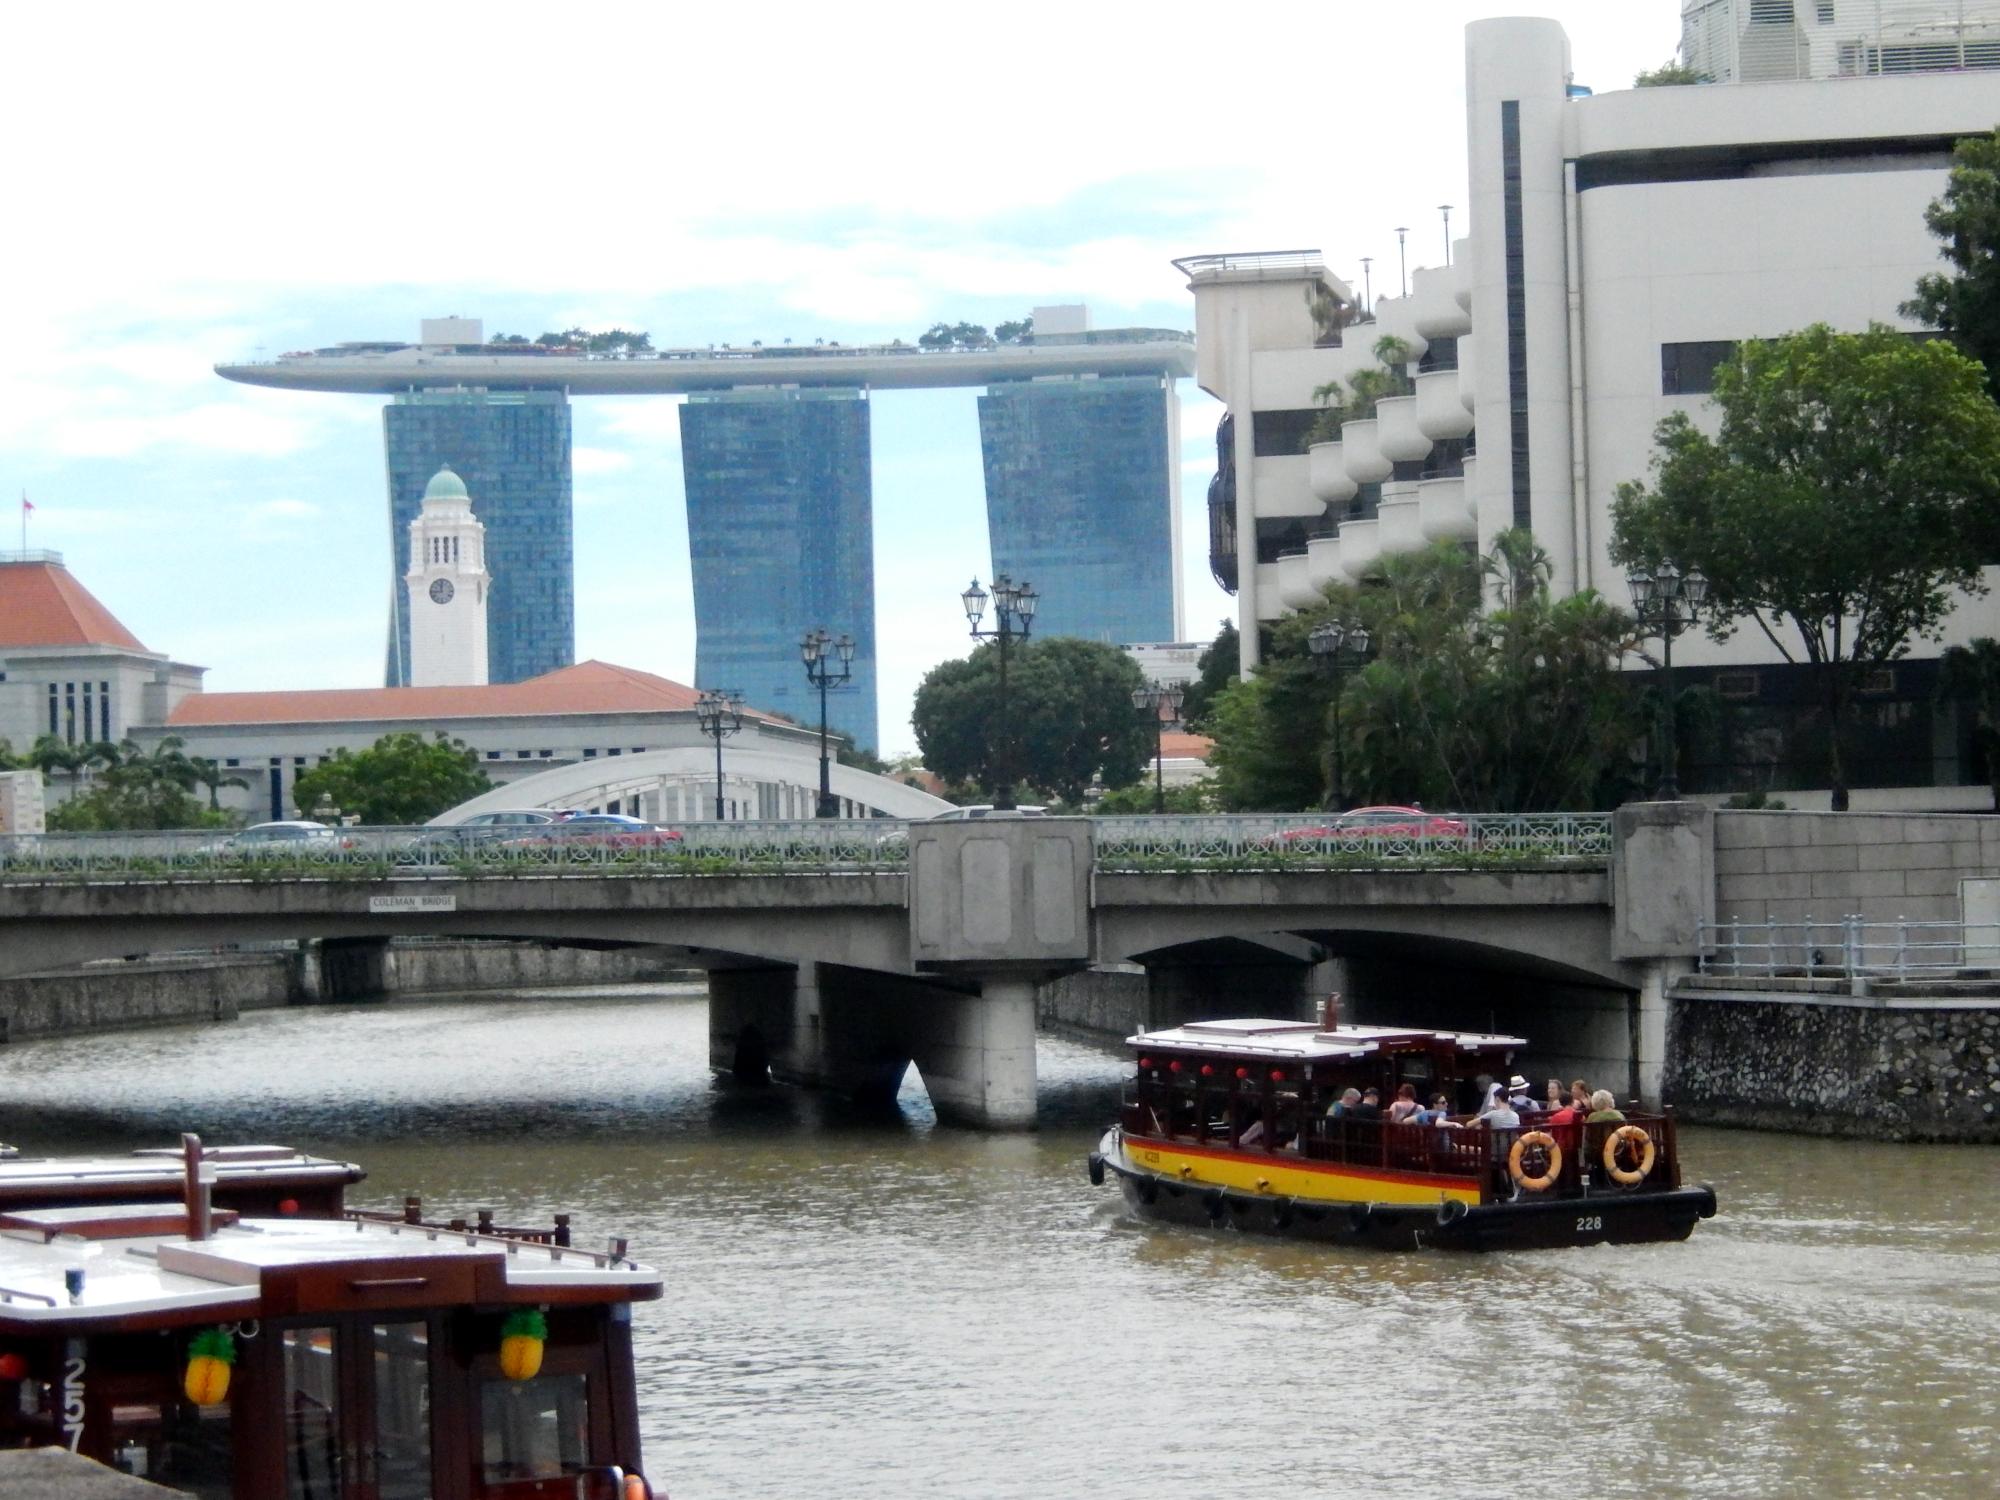 South China Sea (2016) - Singapore River #5